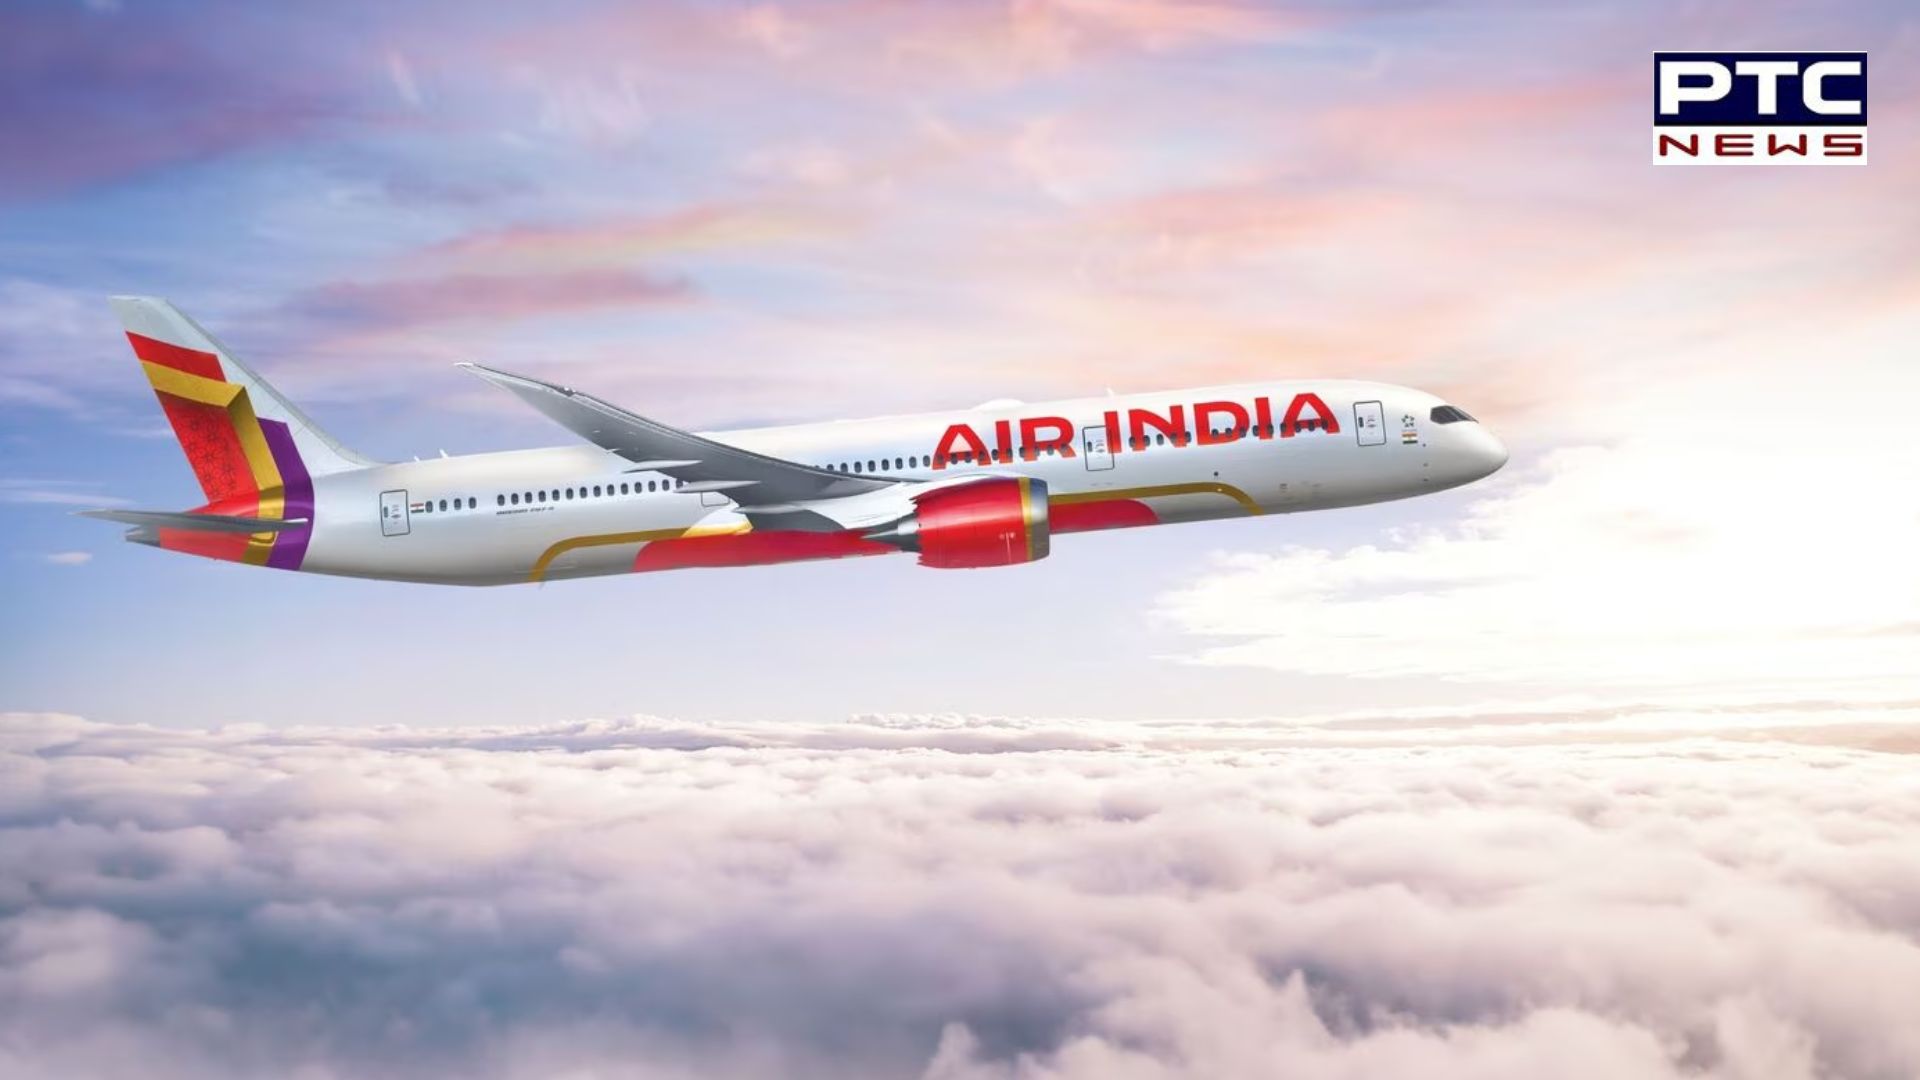 Air India ਐਕਸਪ੍ਰੈਸ ਲਿਆਇਆ 'Republic Day' ਸੇਲ, ਆਫ਼ਰਾਂ 'ਚ 26 ਫ਼ੀਸਦੀ ਤੱਕ ਦੀ ਮਿਲੇਗੀ ਛੋਟ